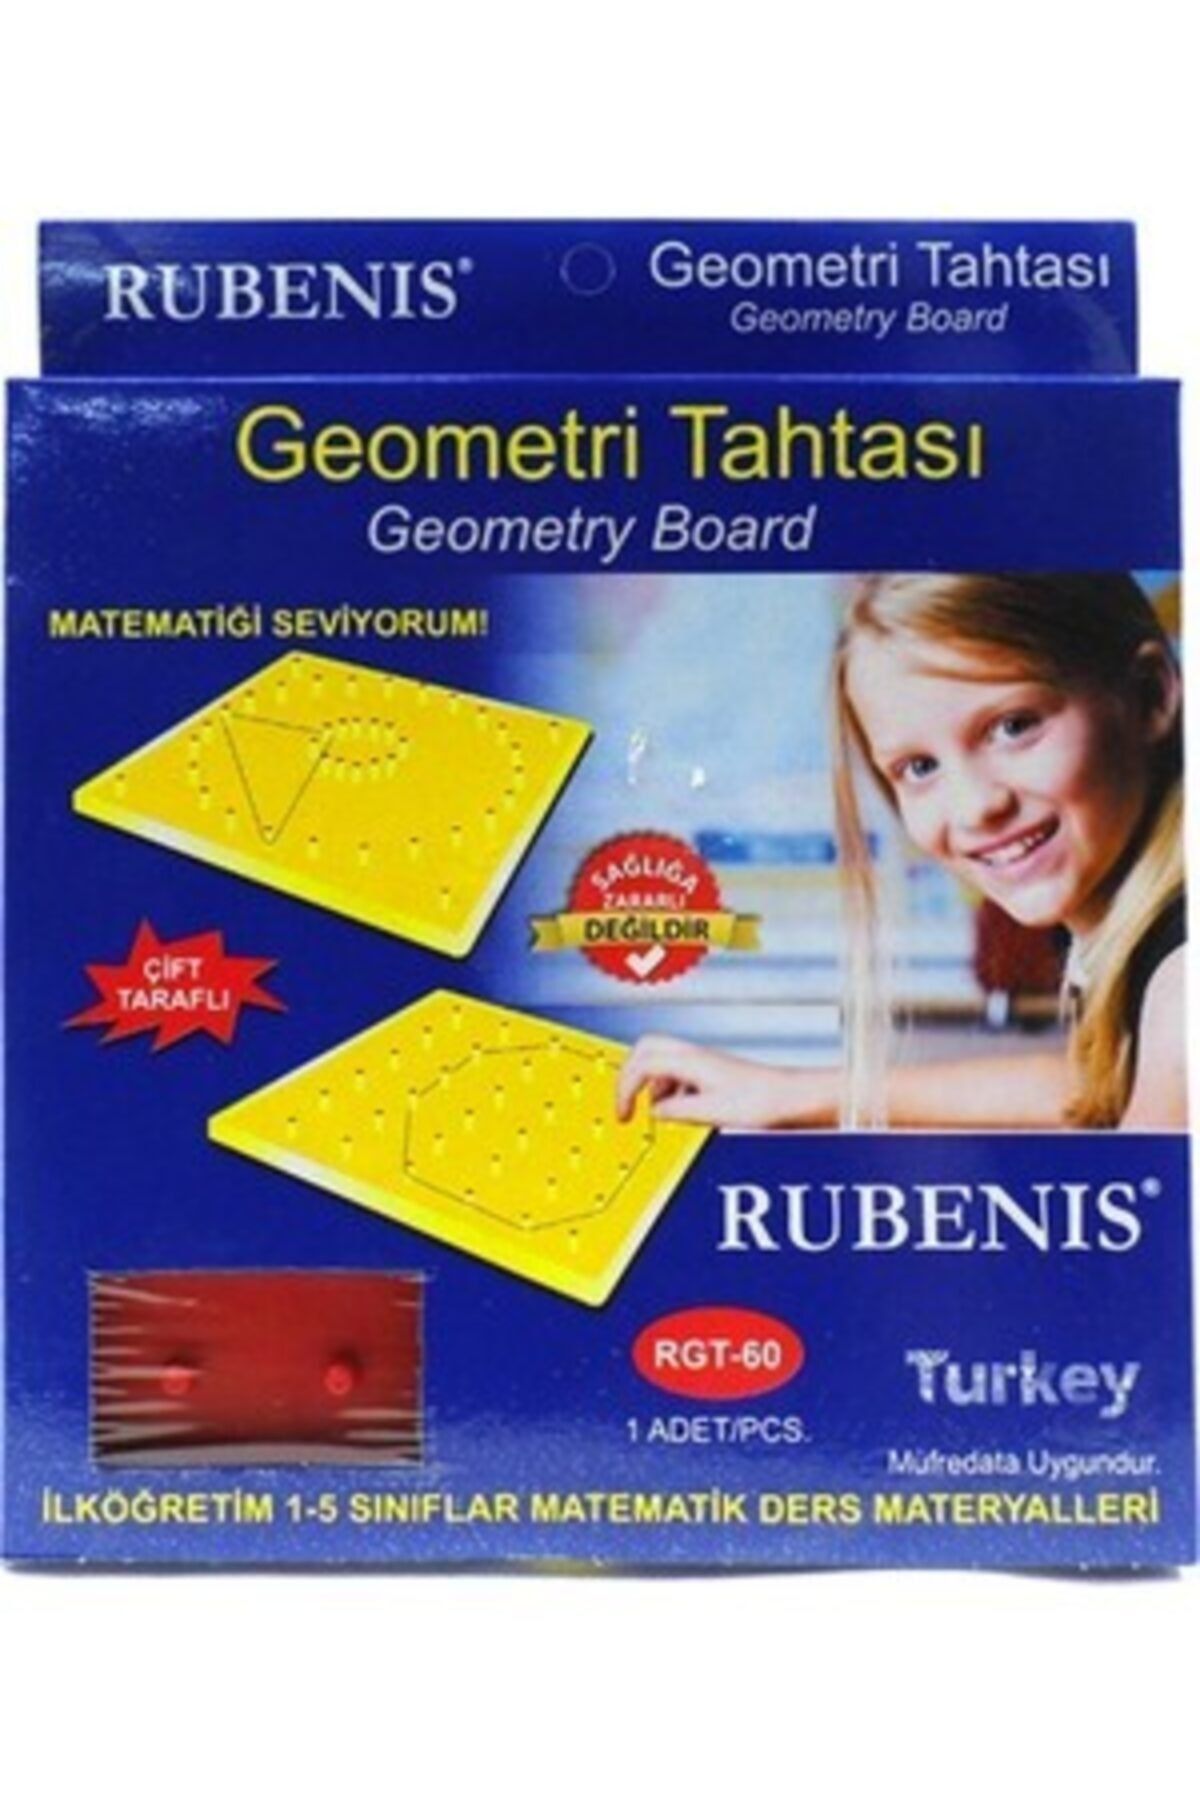 Rubenis Geometri Tahtası